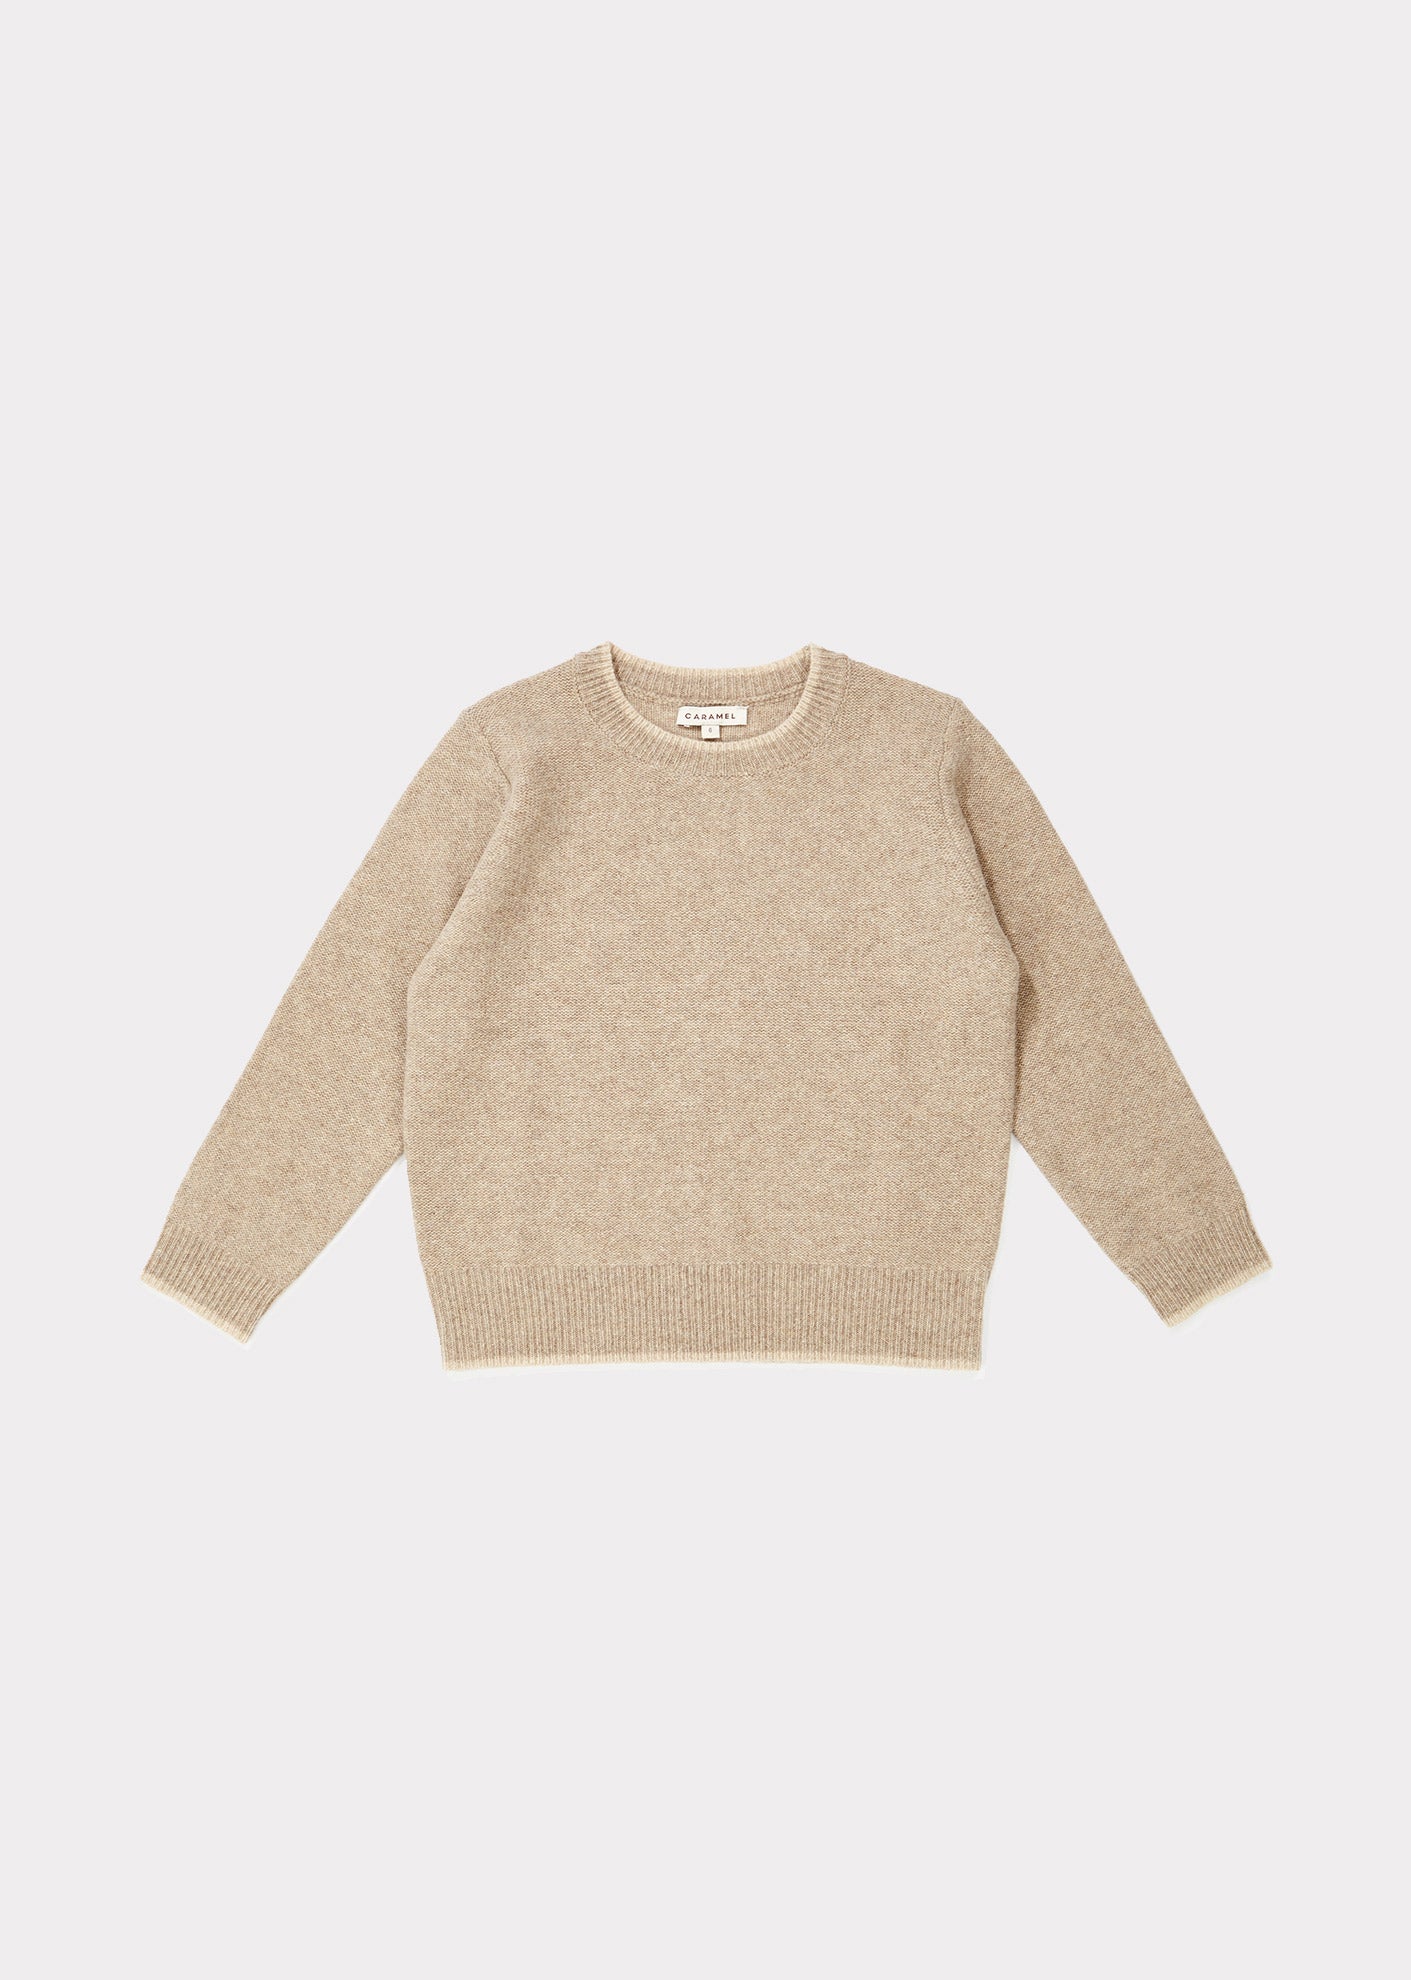 Boys & Girls Khaki Wool Sweater